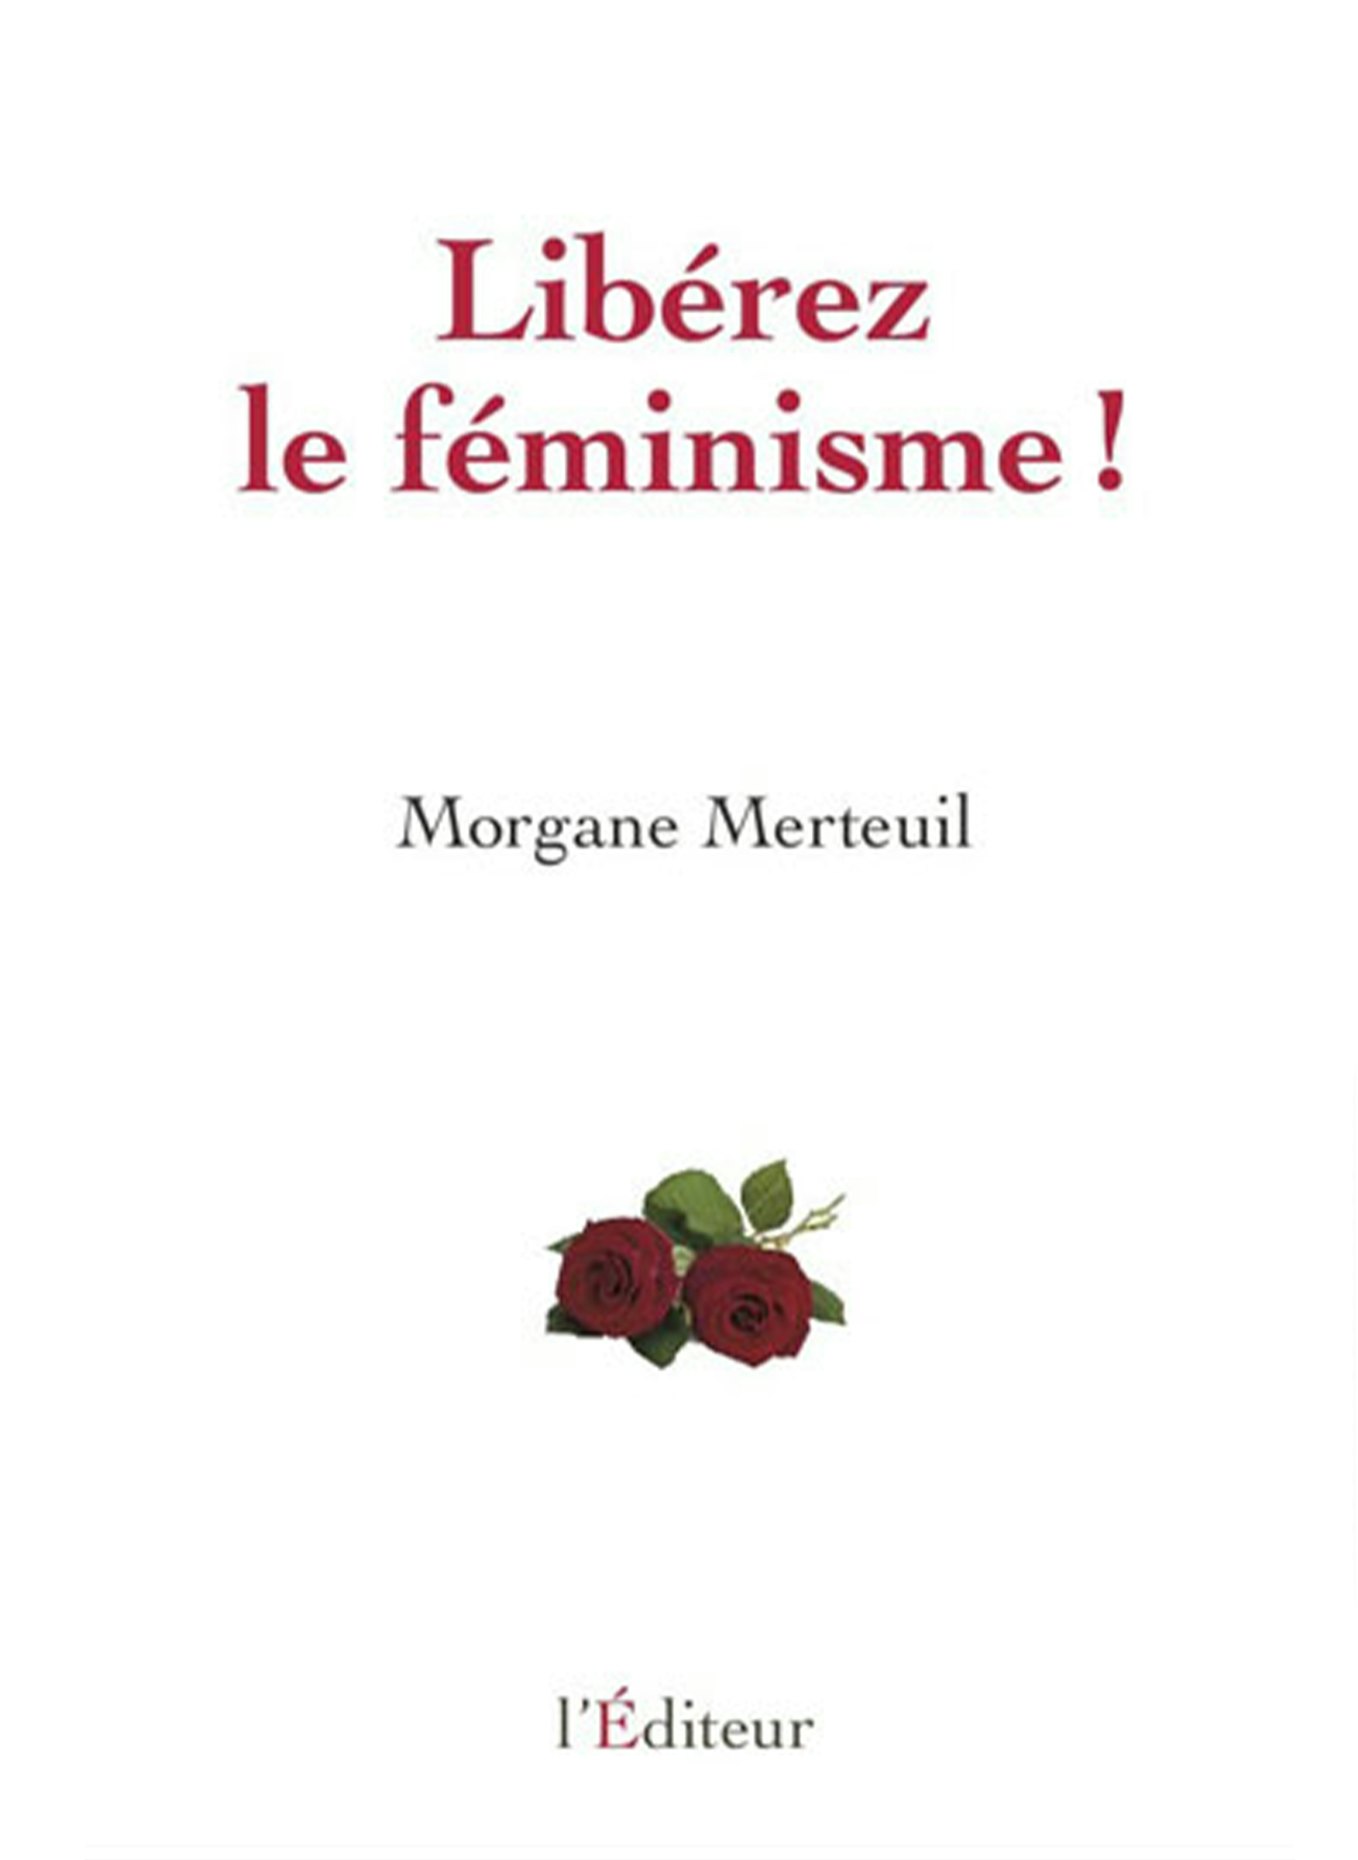 Libérez le féminisme - Morgane Merteuil